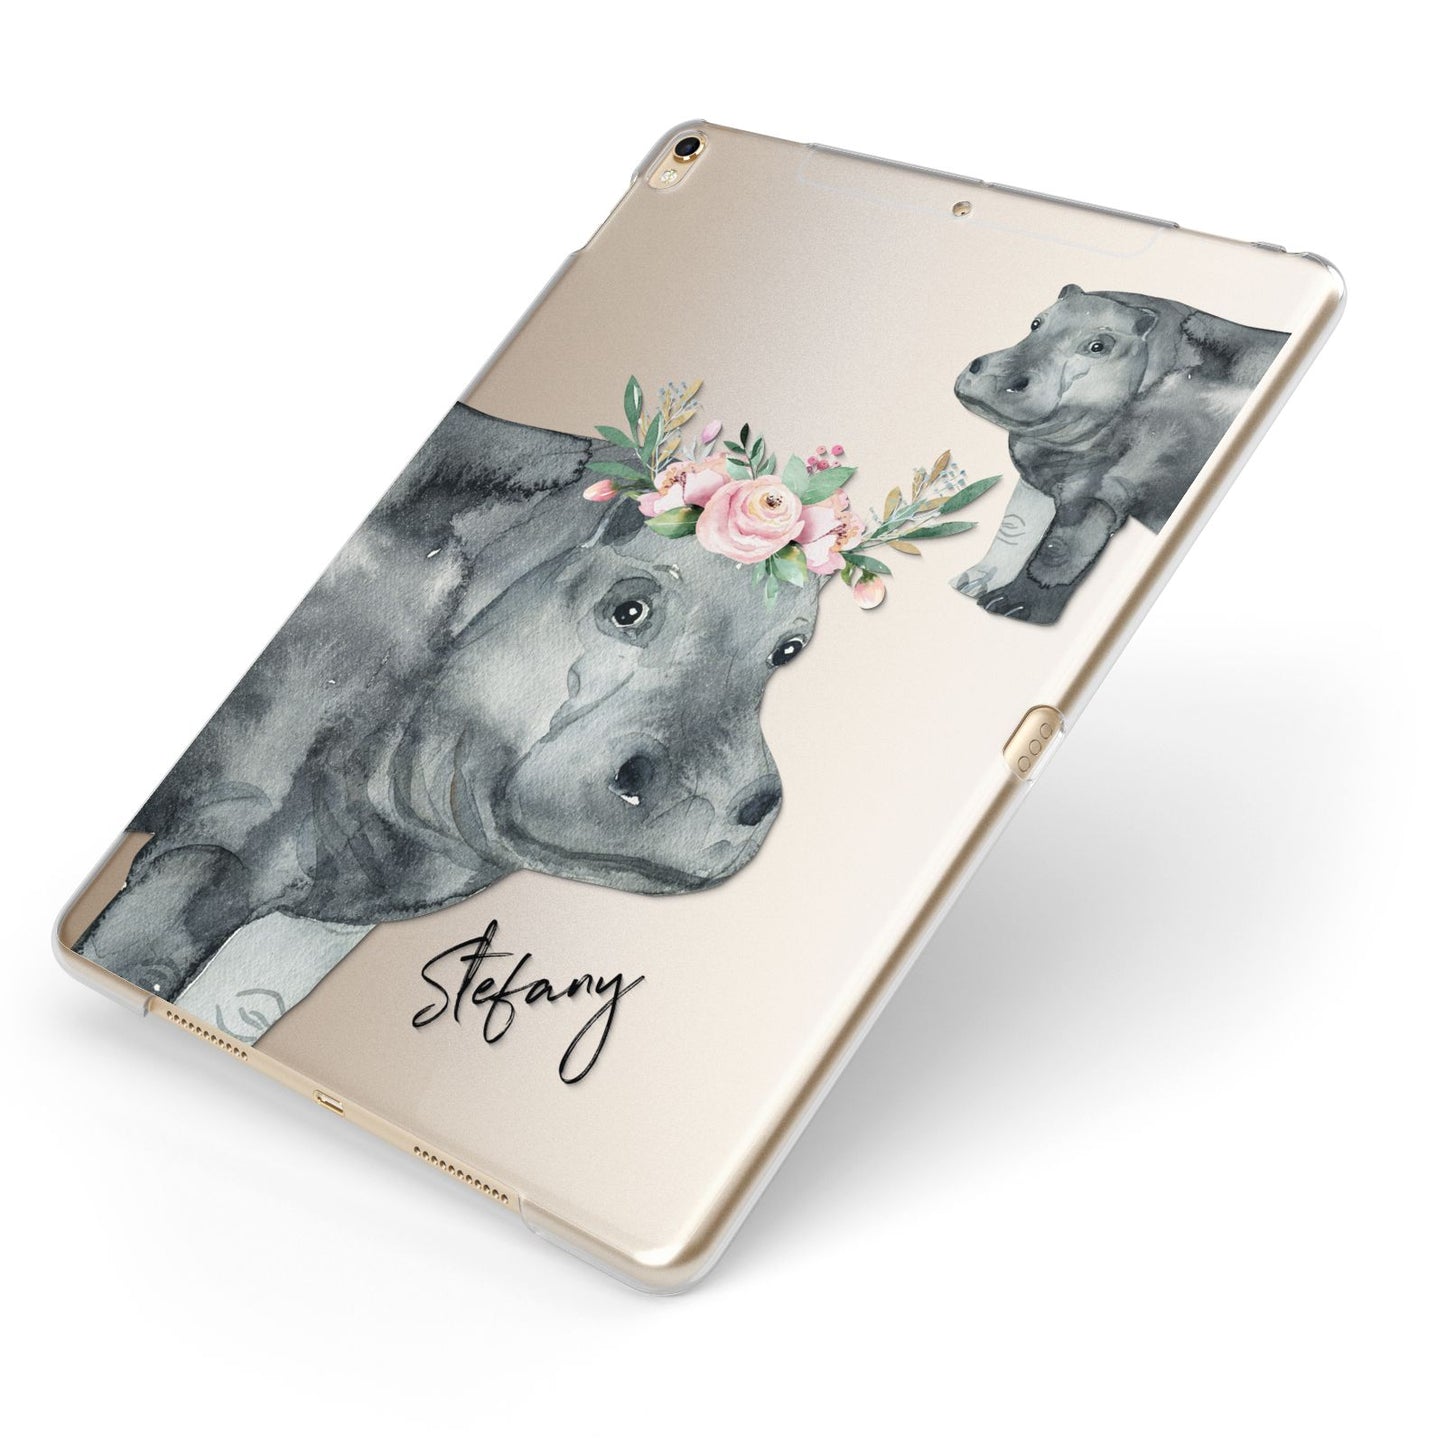 Personalised Hippopotamus Apple iPad Case on Gold iPad Side View